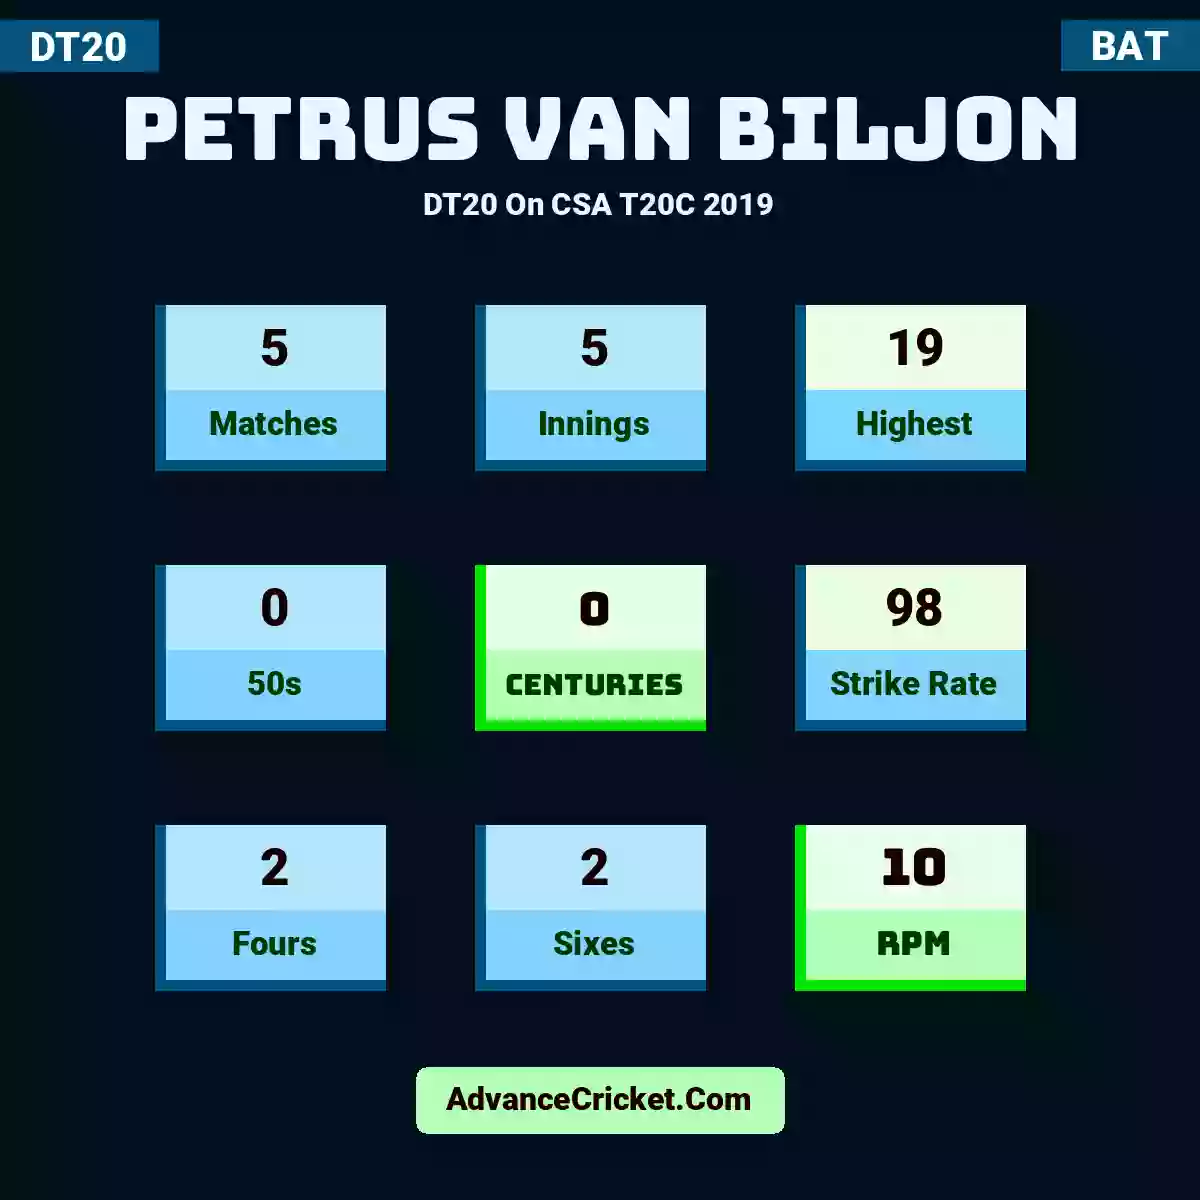 Petrus van Biljon DT20  On CSA T20C 2019, Petrus van Biljon played 5 matches, scored 19 runs as highest, 0 half-centuries, and 0 centuries, with a strike rate of 98. P.Biljon hit 2 fours and 2 sixes, with an RPM of 10.